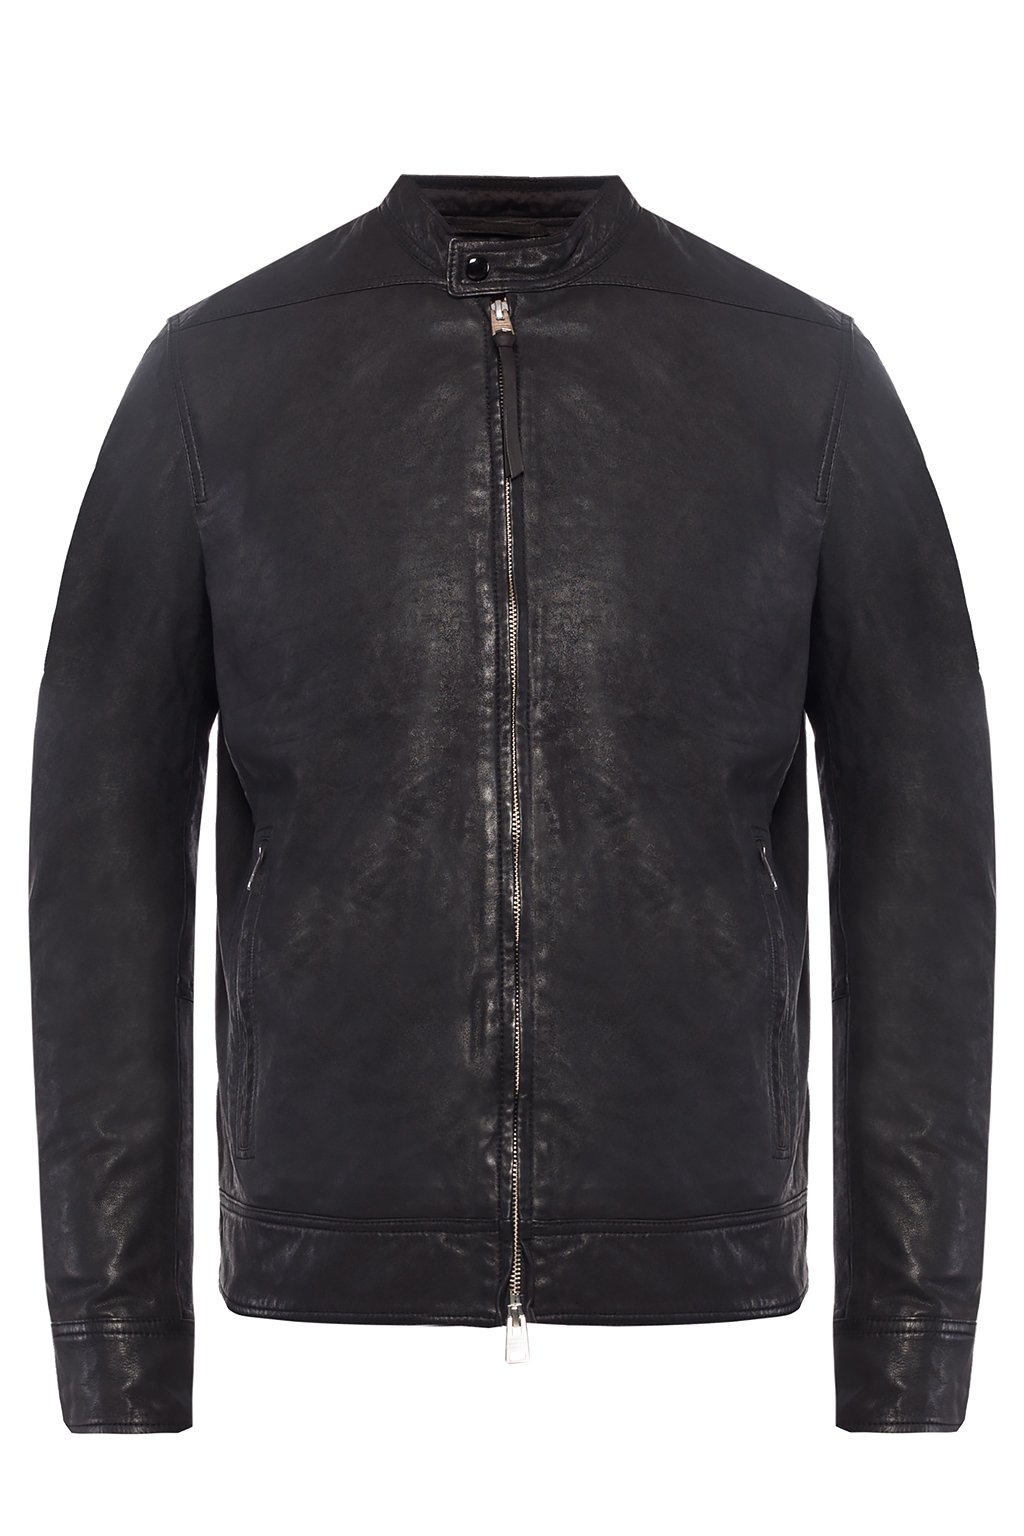 AllSaints ‘Colt’ leather jacket | Men's Clothing | Vitkac